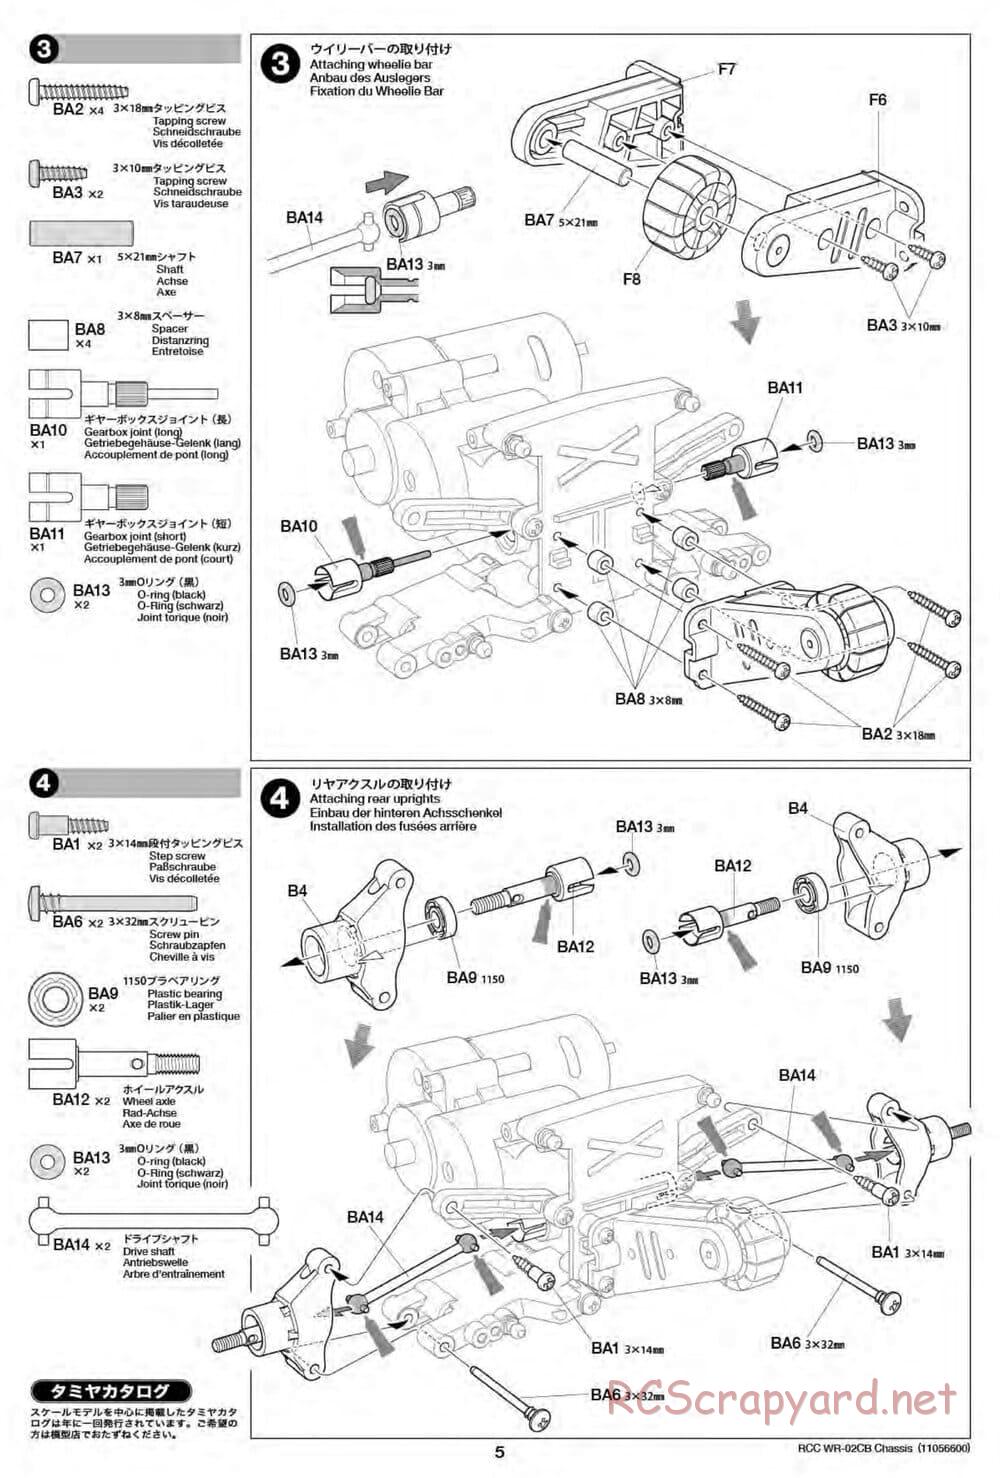 Tamiya - WR-02CB Chassis - Manual - Page 5